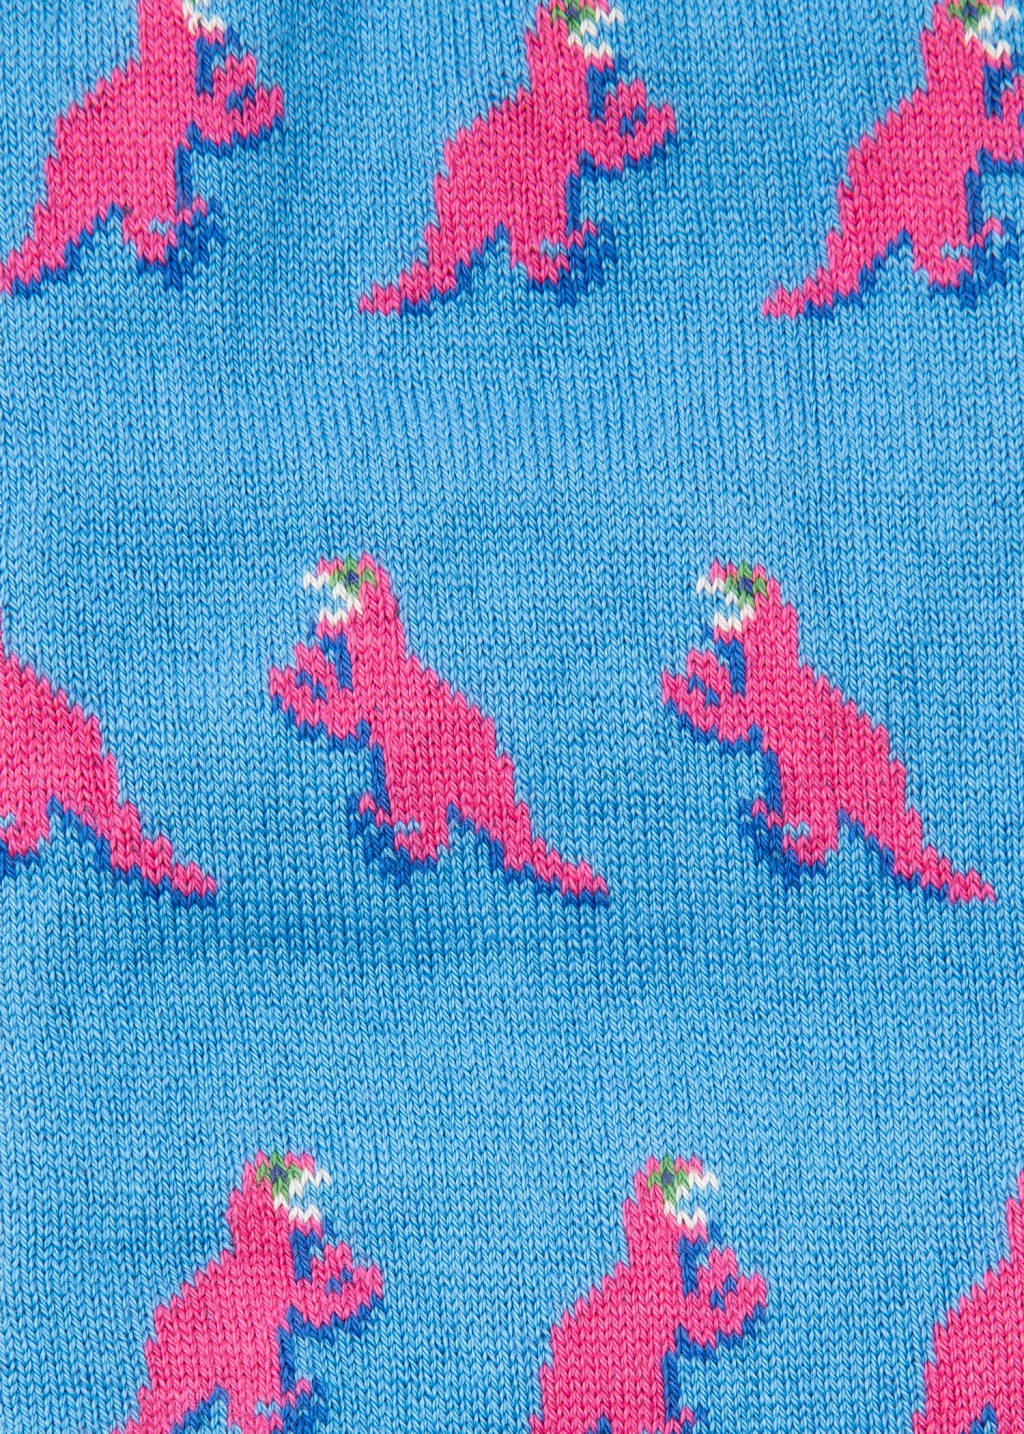 Detail View - Multi-Coloured 'Dino' Socks Three Pack Paul Smith